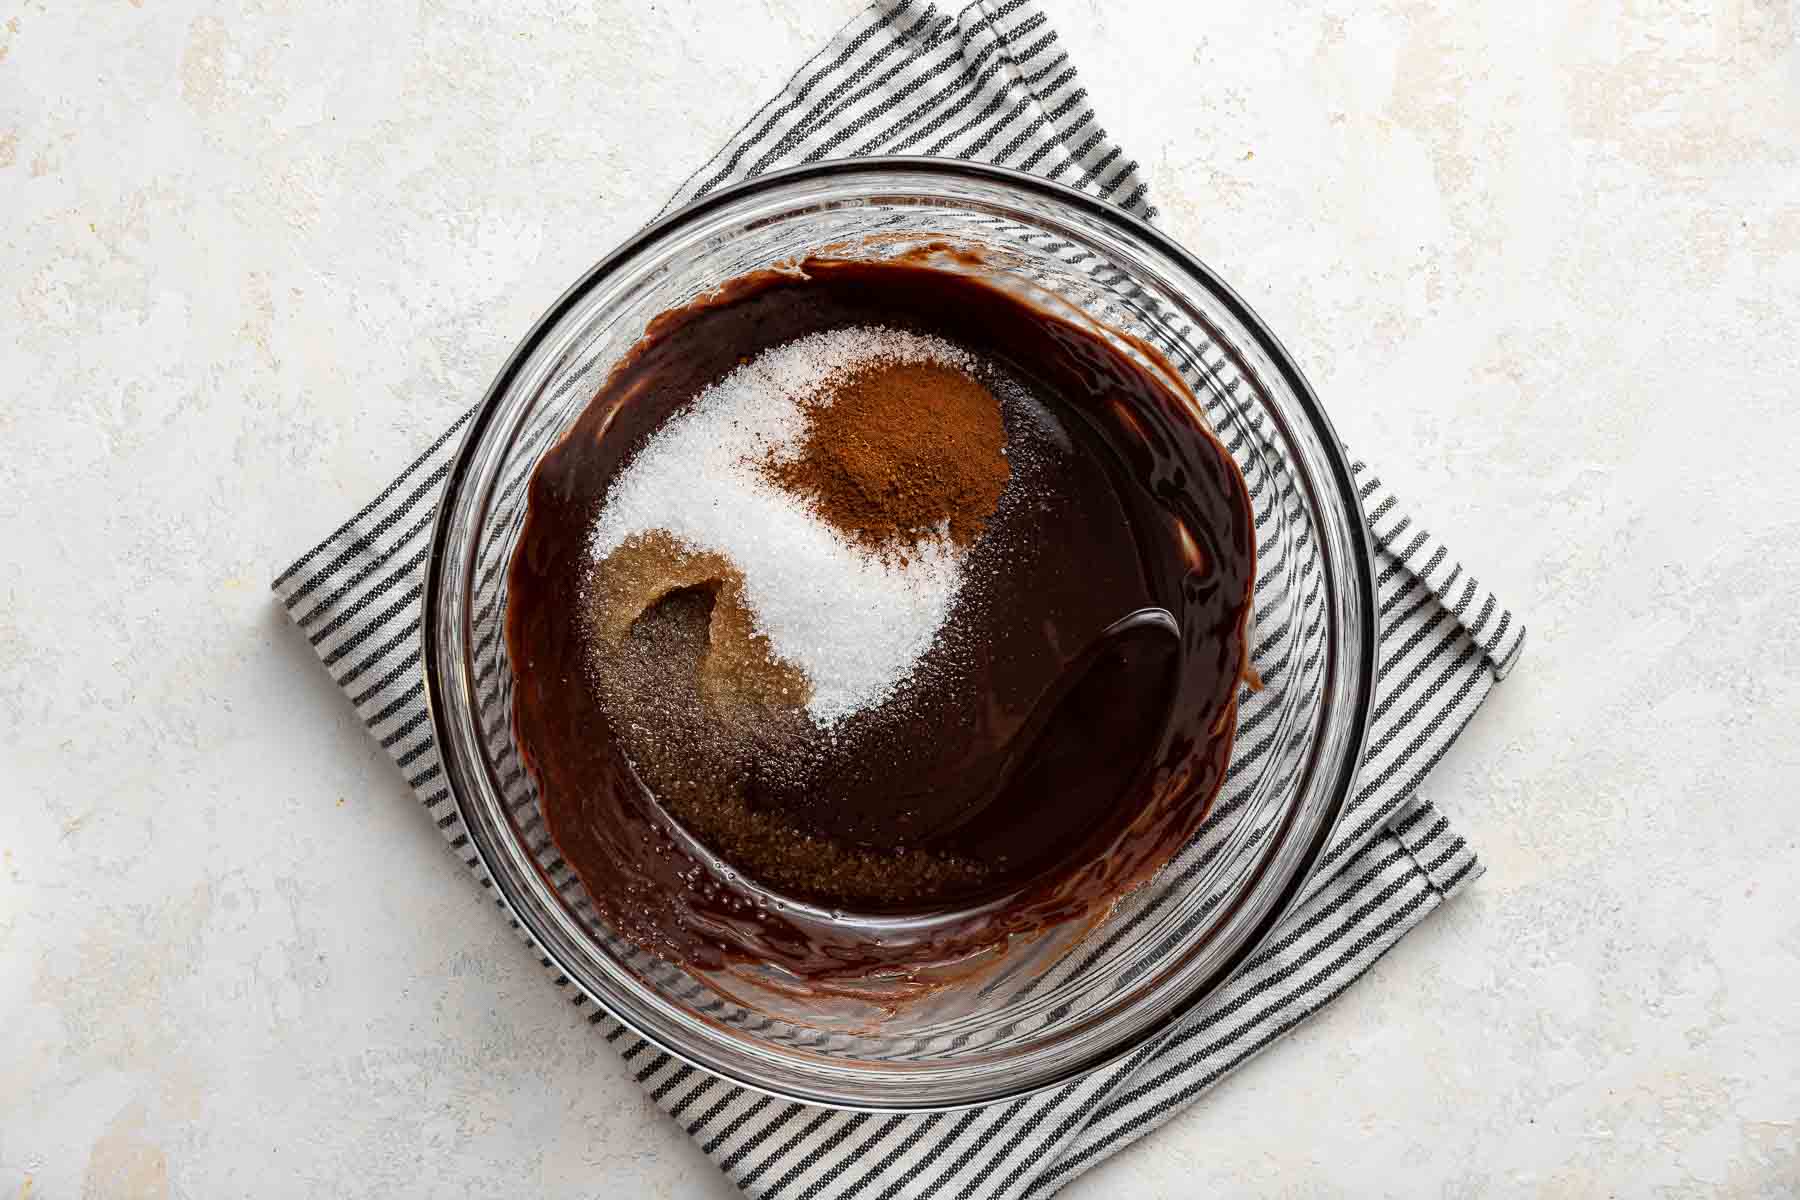 Stirring sugar, espresso powder and vanilla into raw brownie batter in glass bowl.